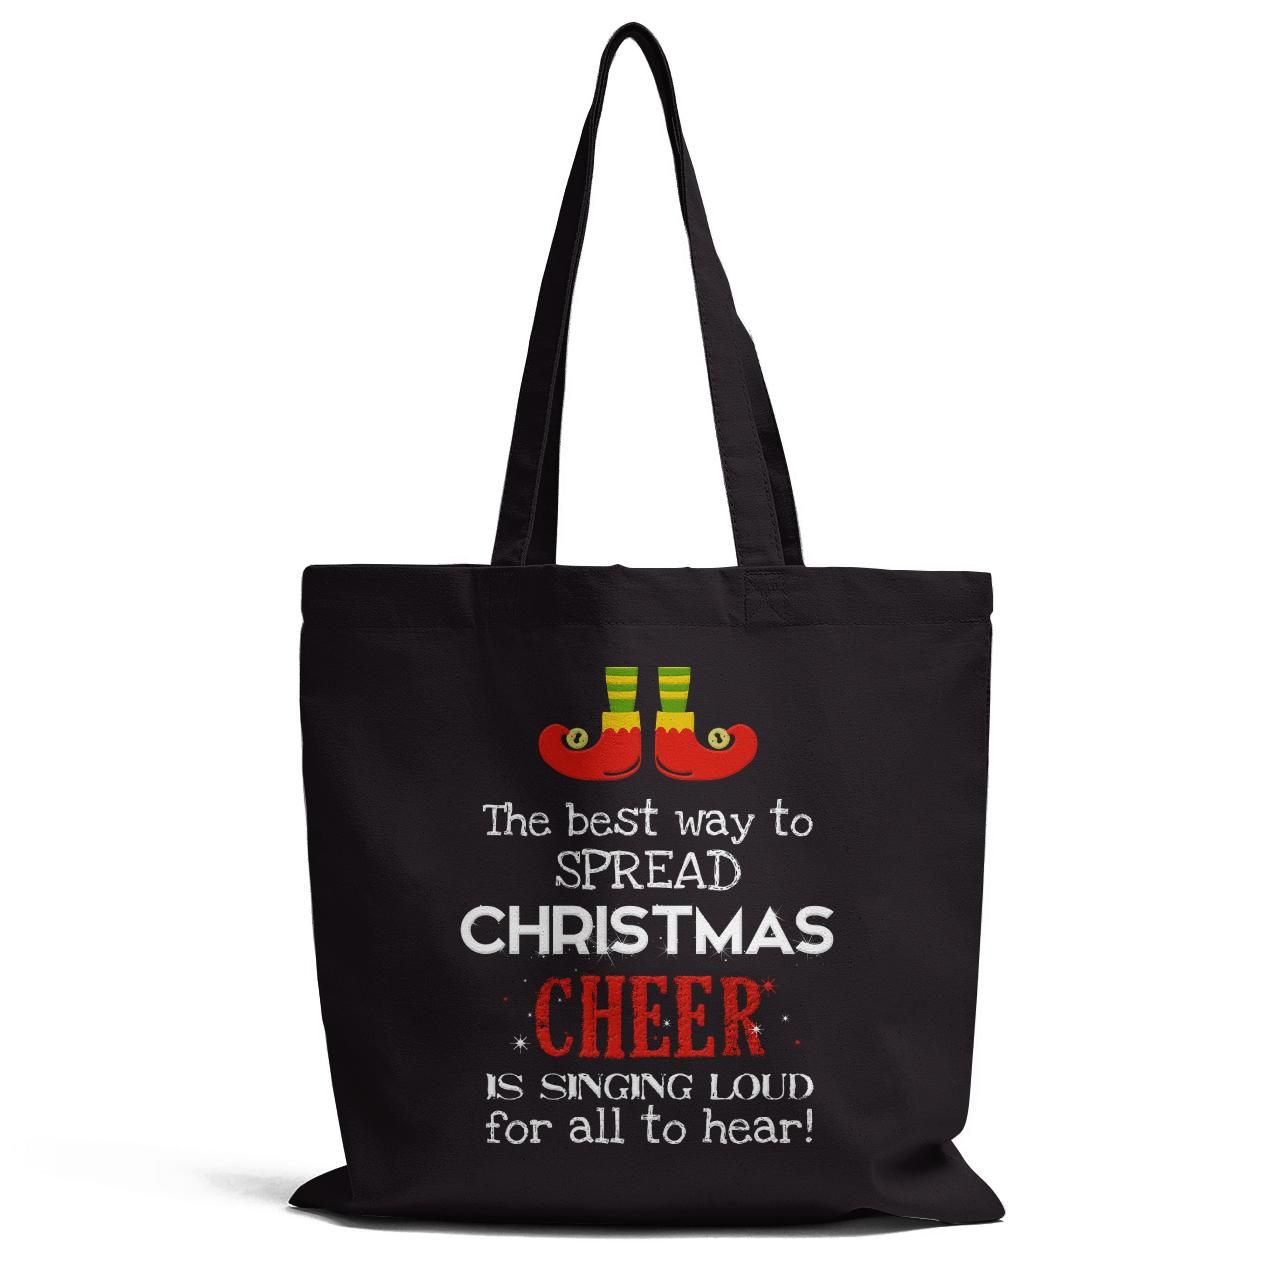 The Best Way To Spread Christmas Cheer Is Singing Loud Tote Bag